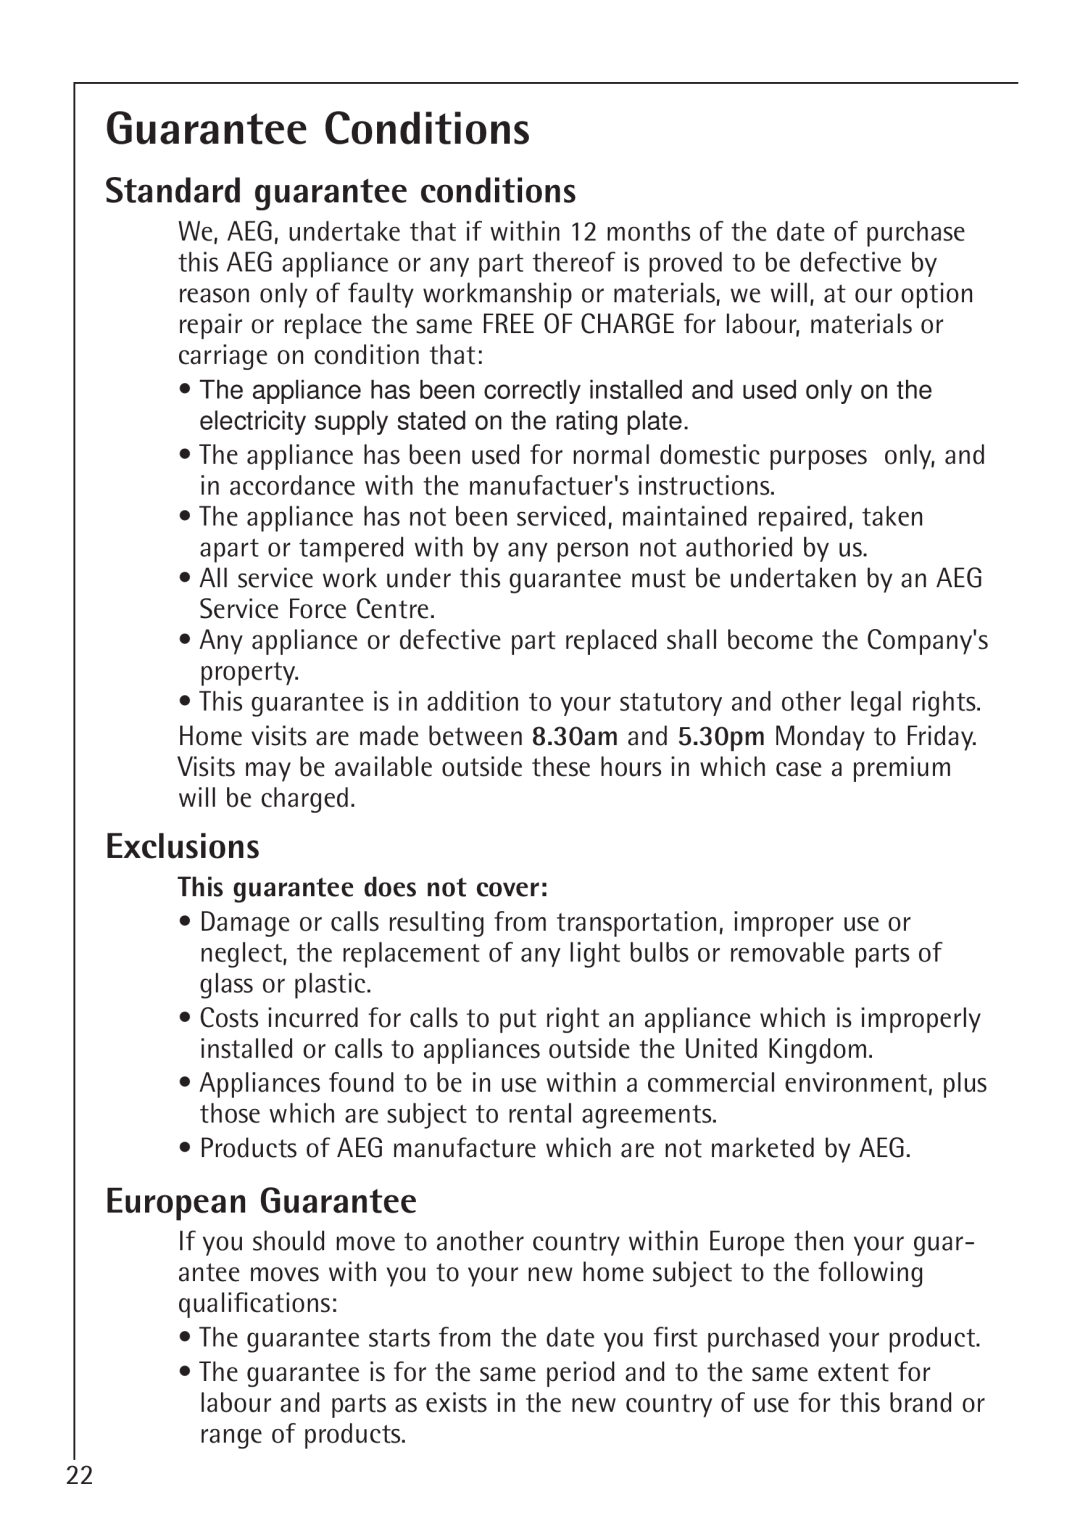 Electrolux 1688-7 TK, 1683-7 TK manual Guarantee Conditions, Standard guarantee conditions, Exclusions, European Guarantee 